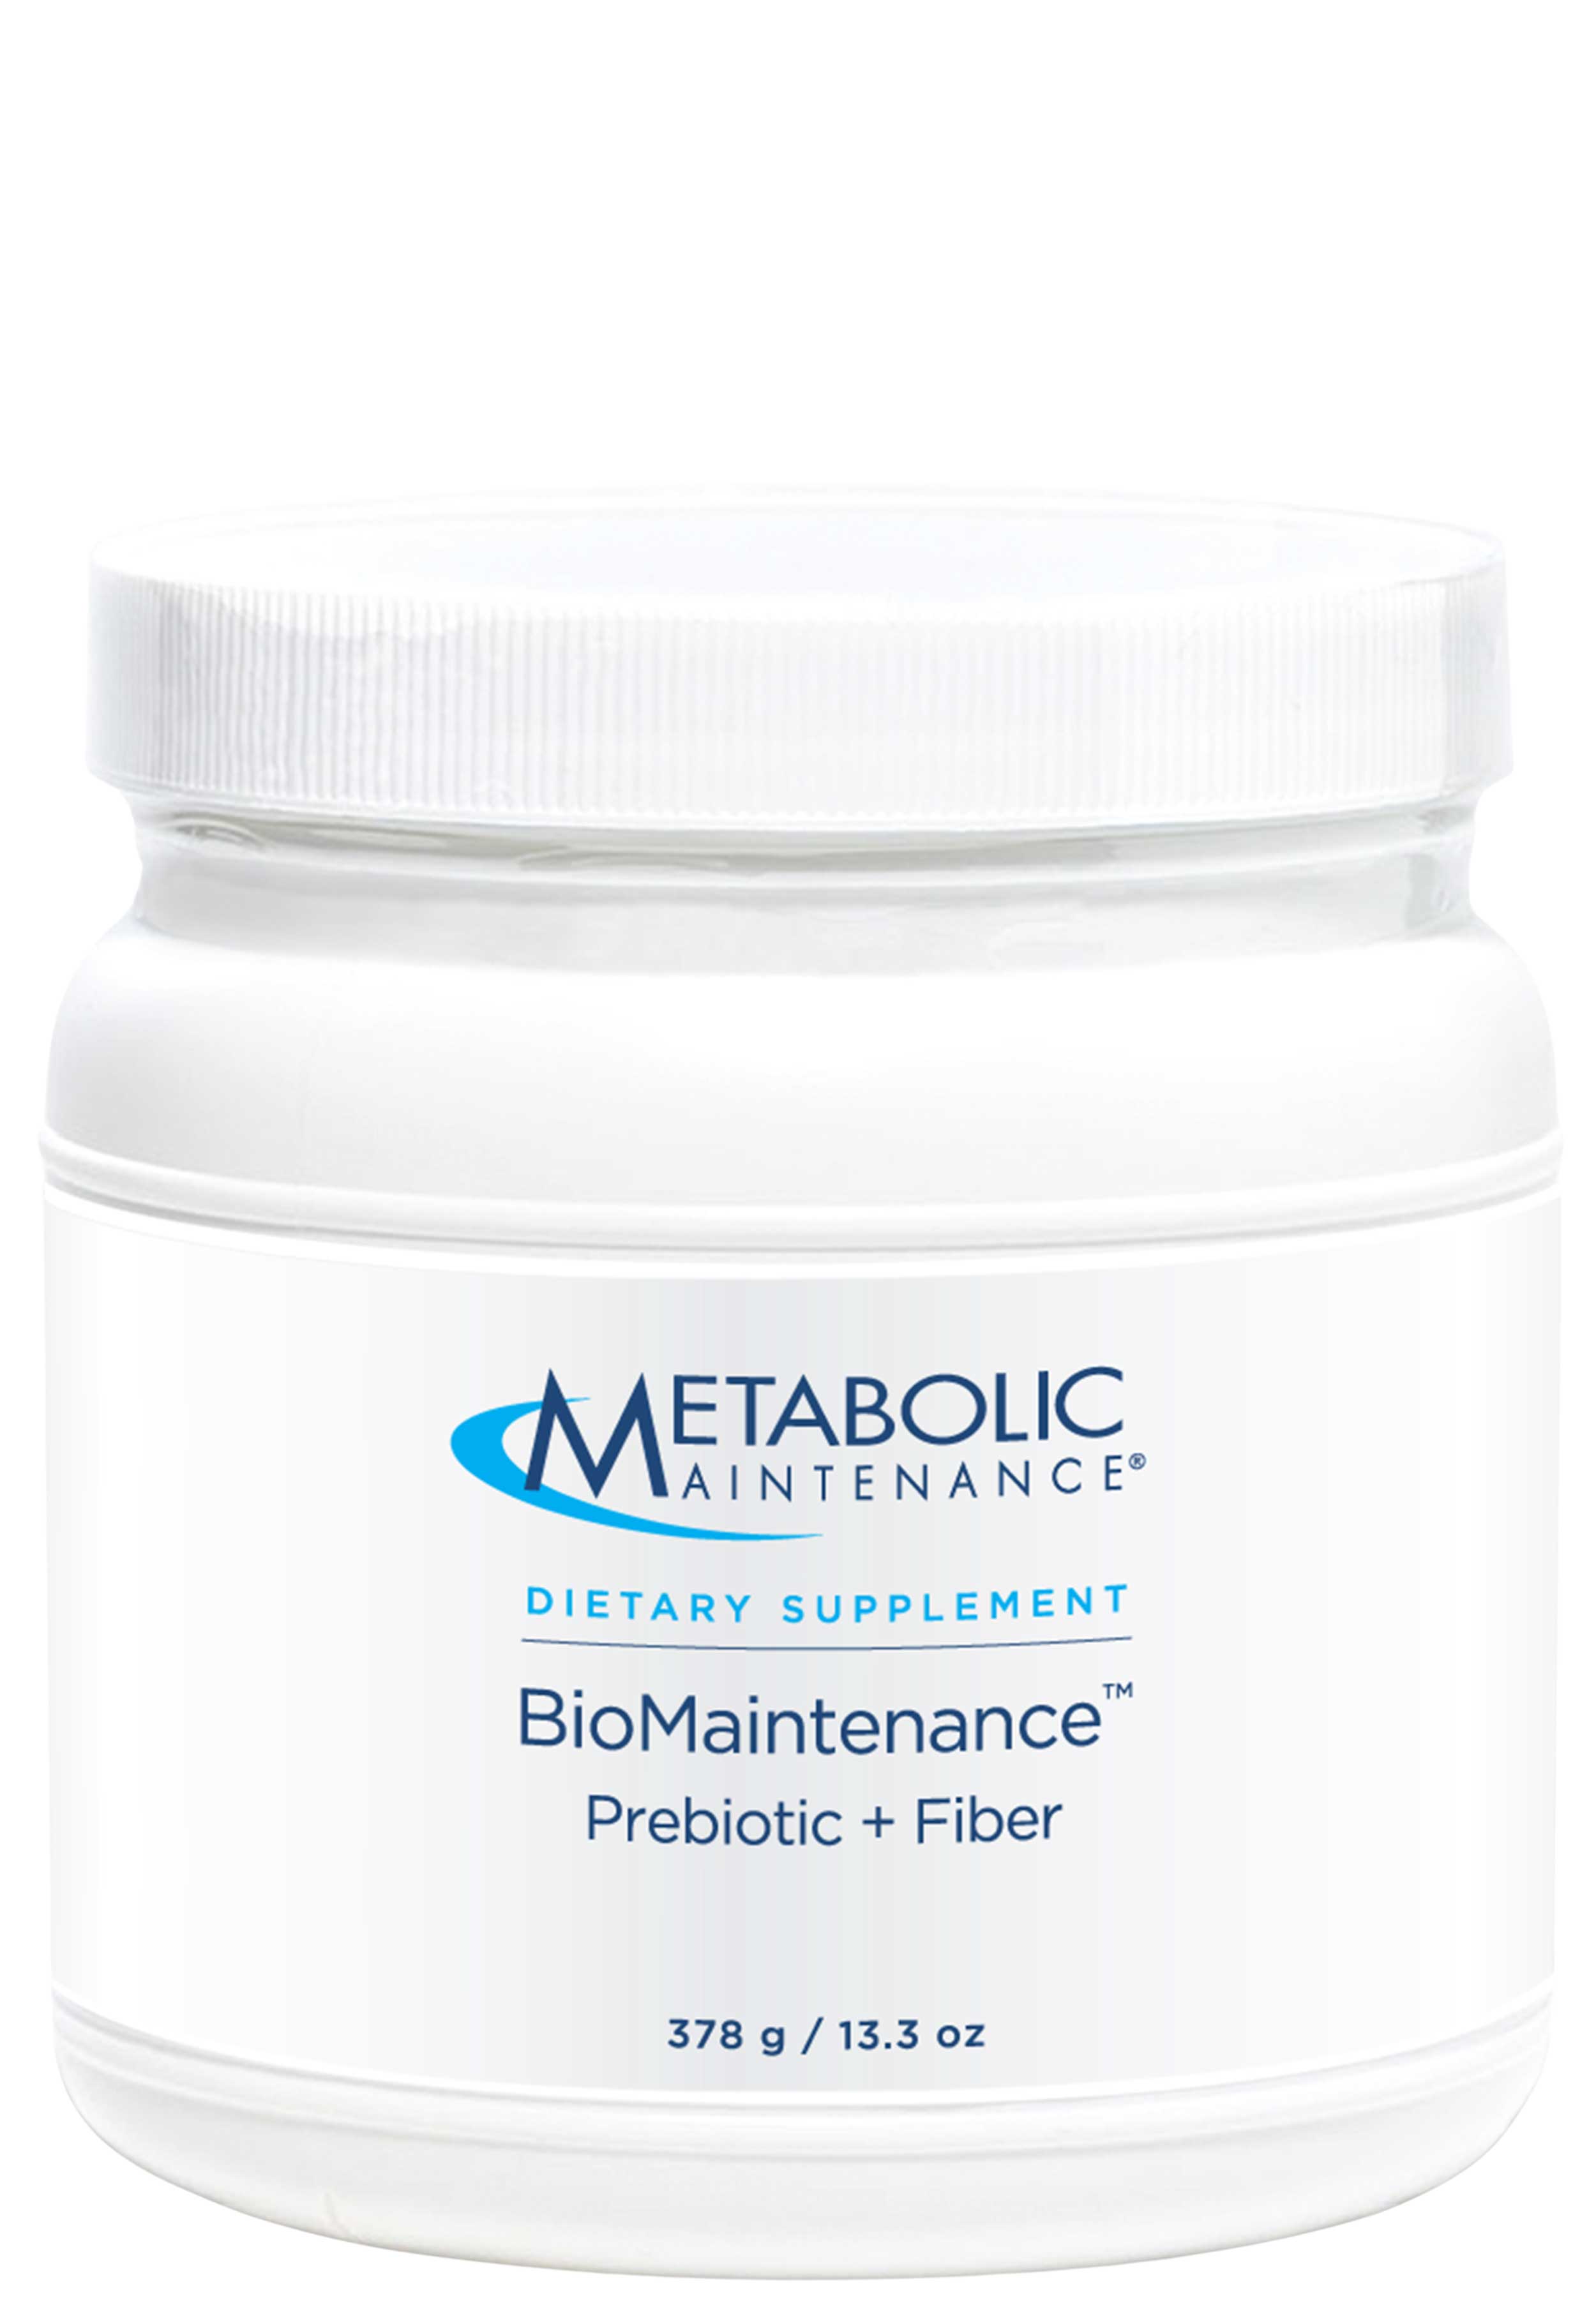 Metabolic Maintenance BioMaintenance Prebiotic + Fiber